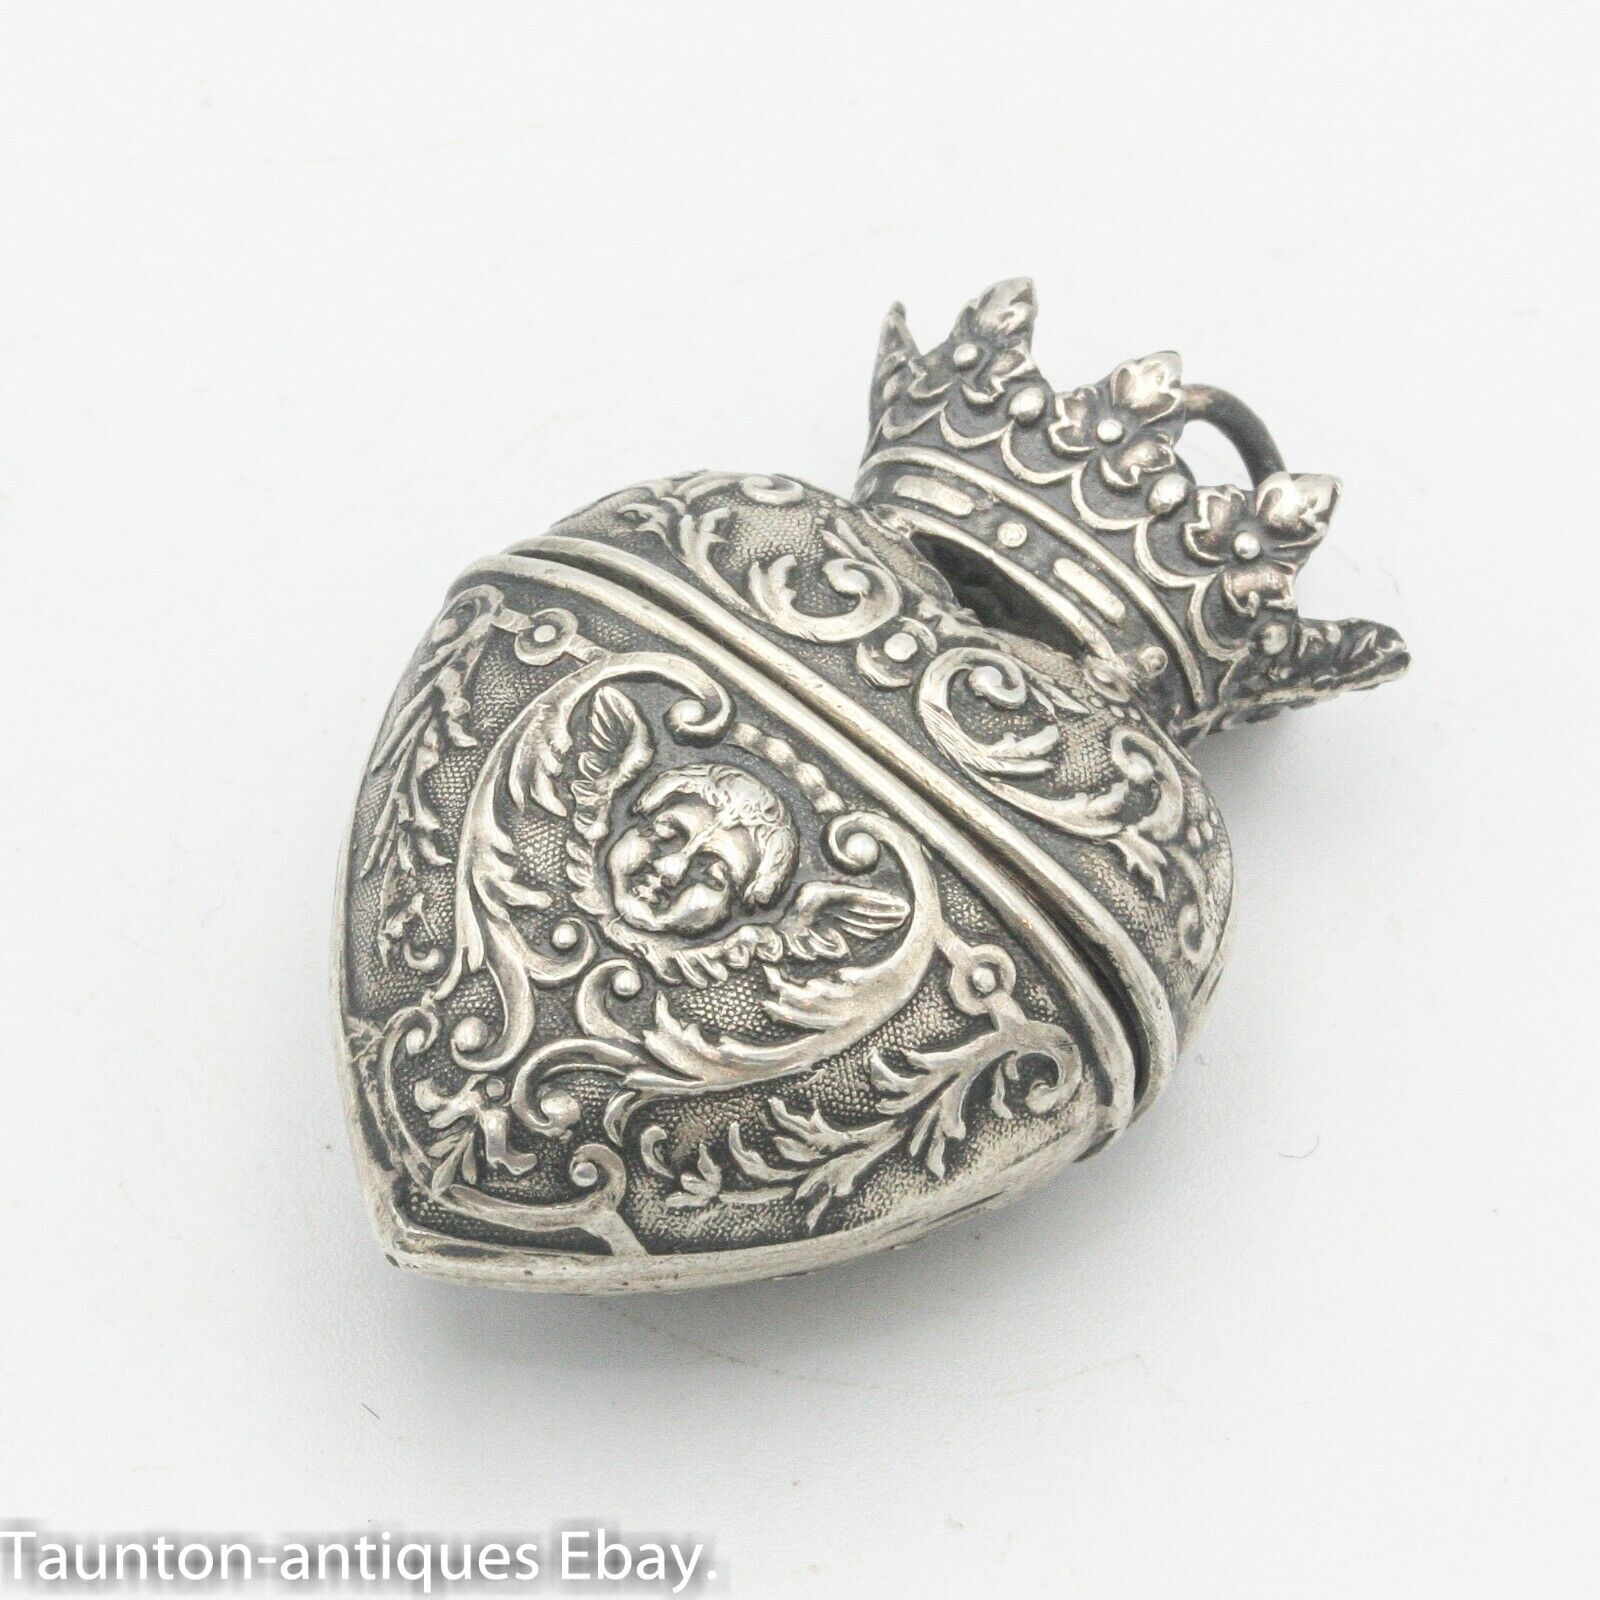 Very rare German 19th C vinaigrette chatelaine pendant solid silver cherub heart